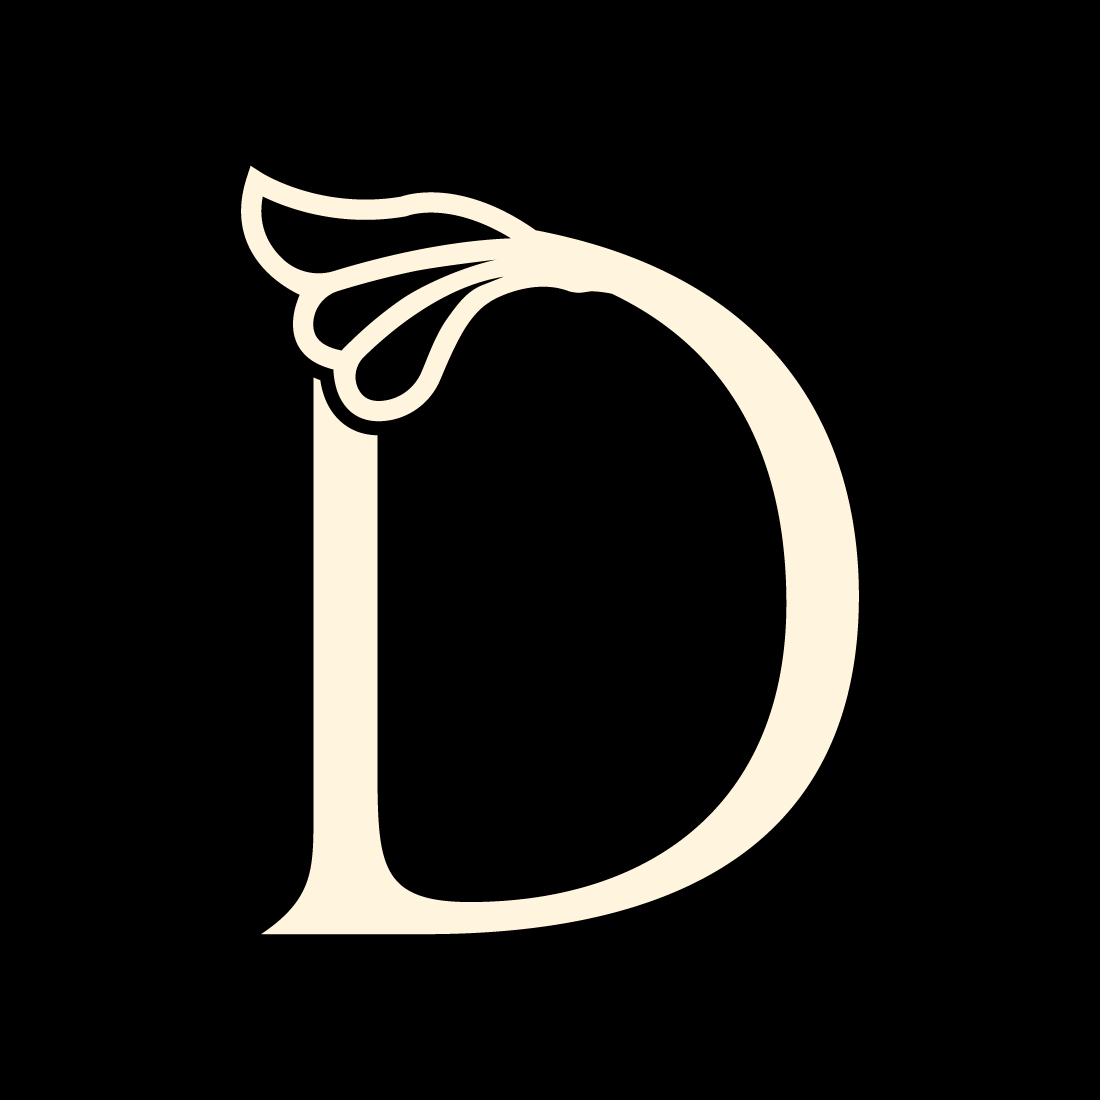 Luxury D letter logo design vector images D logo template vector arts cover image.